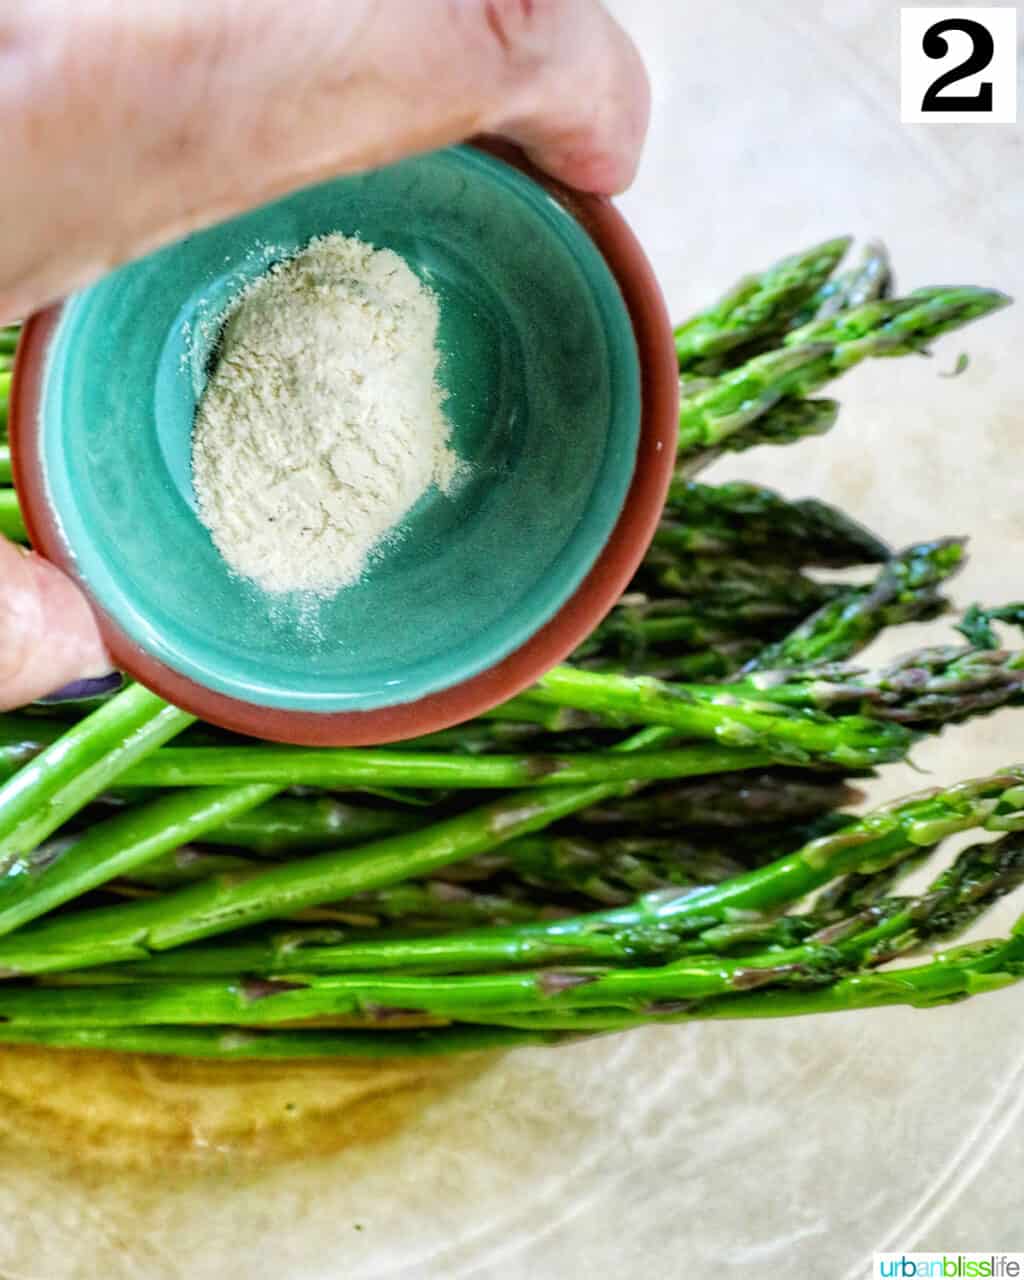 hand holding a bowl of garlic powder over asparagus.